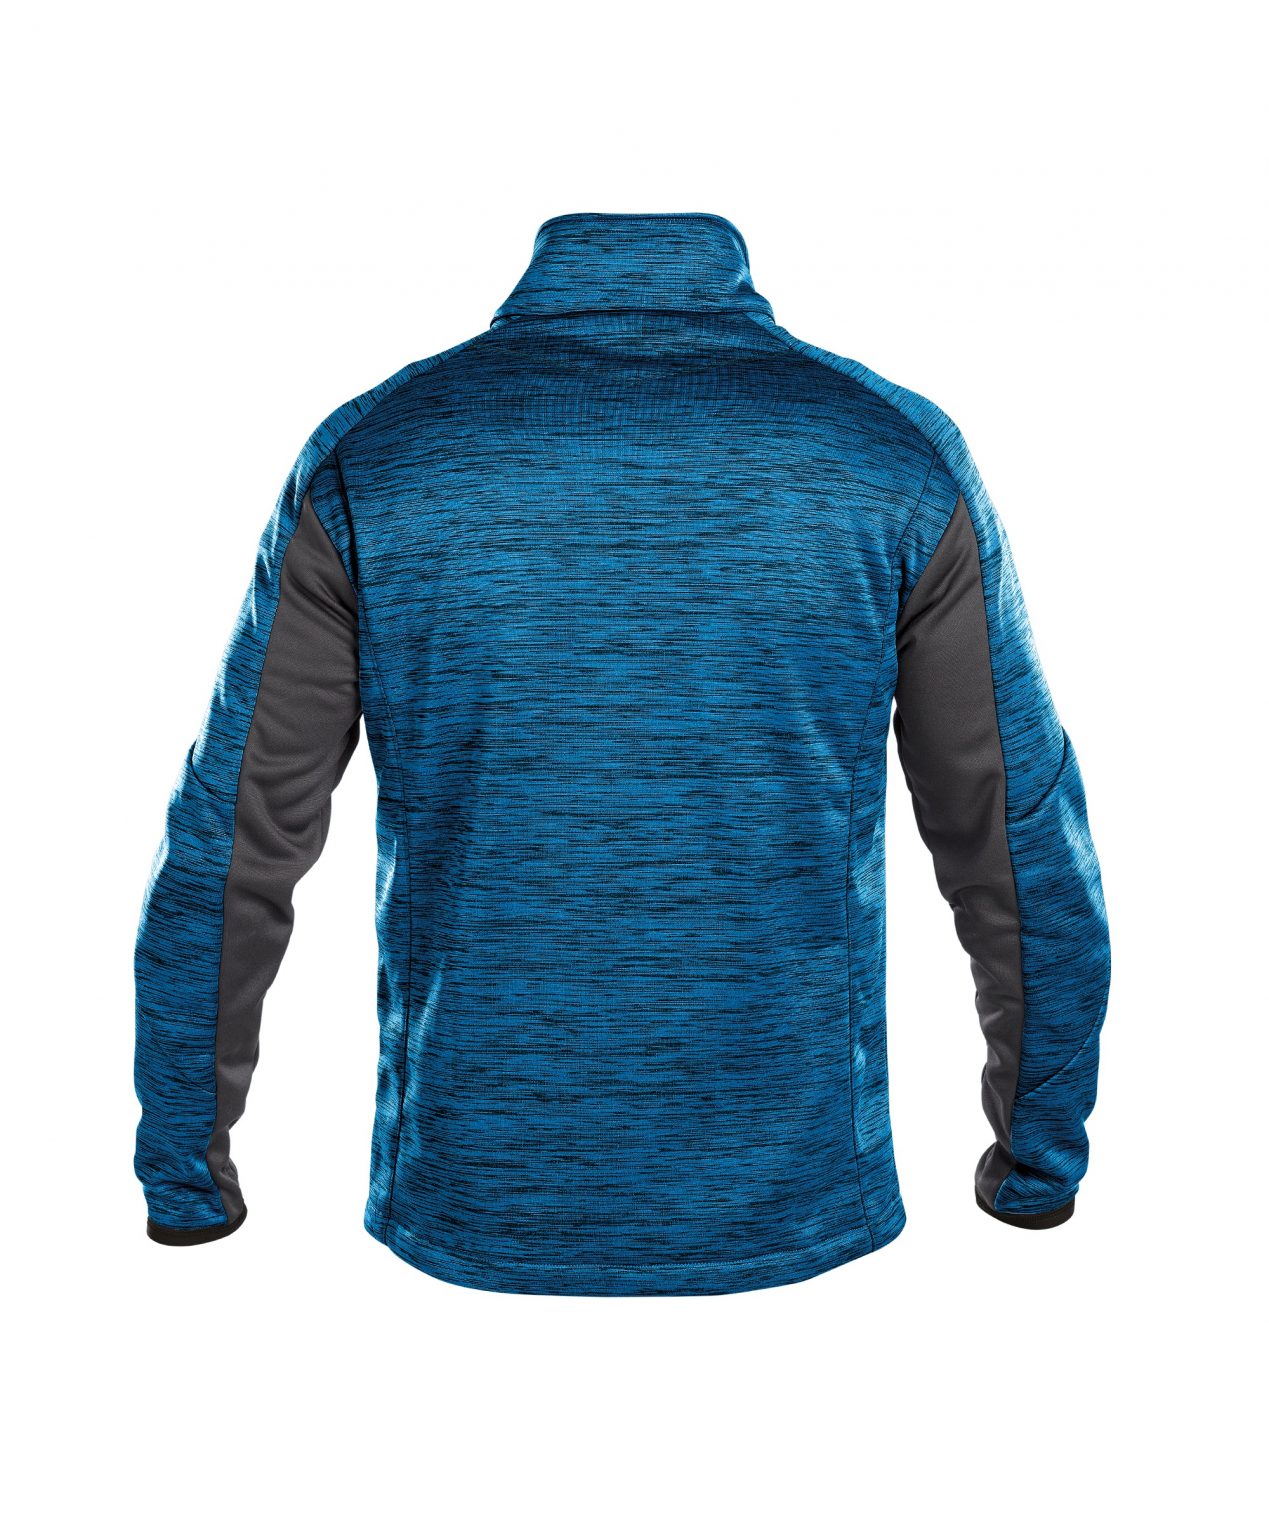 convex midlayer jacket azure blue anthracite grey back